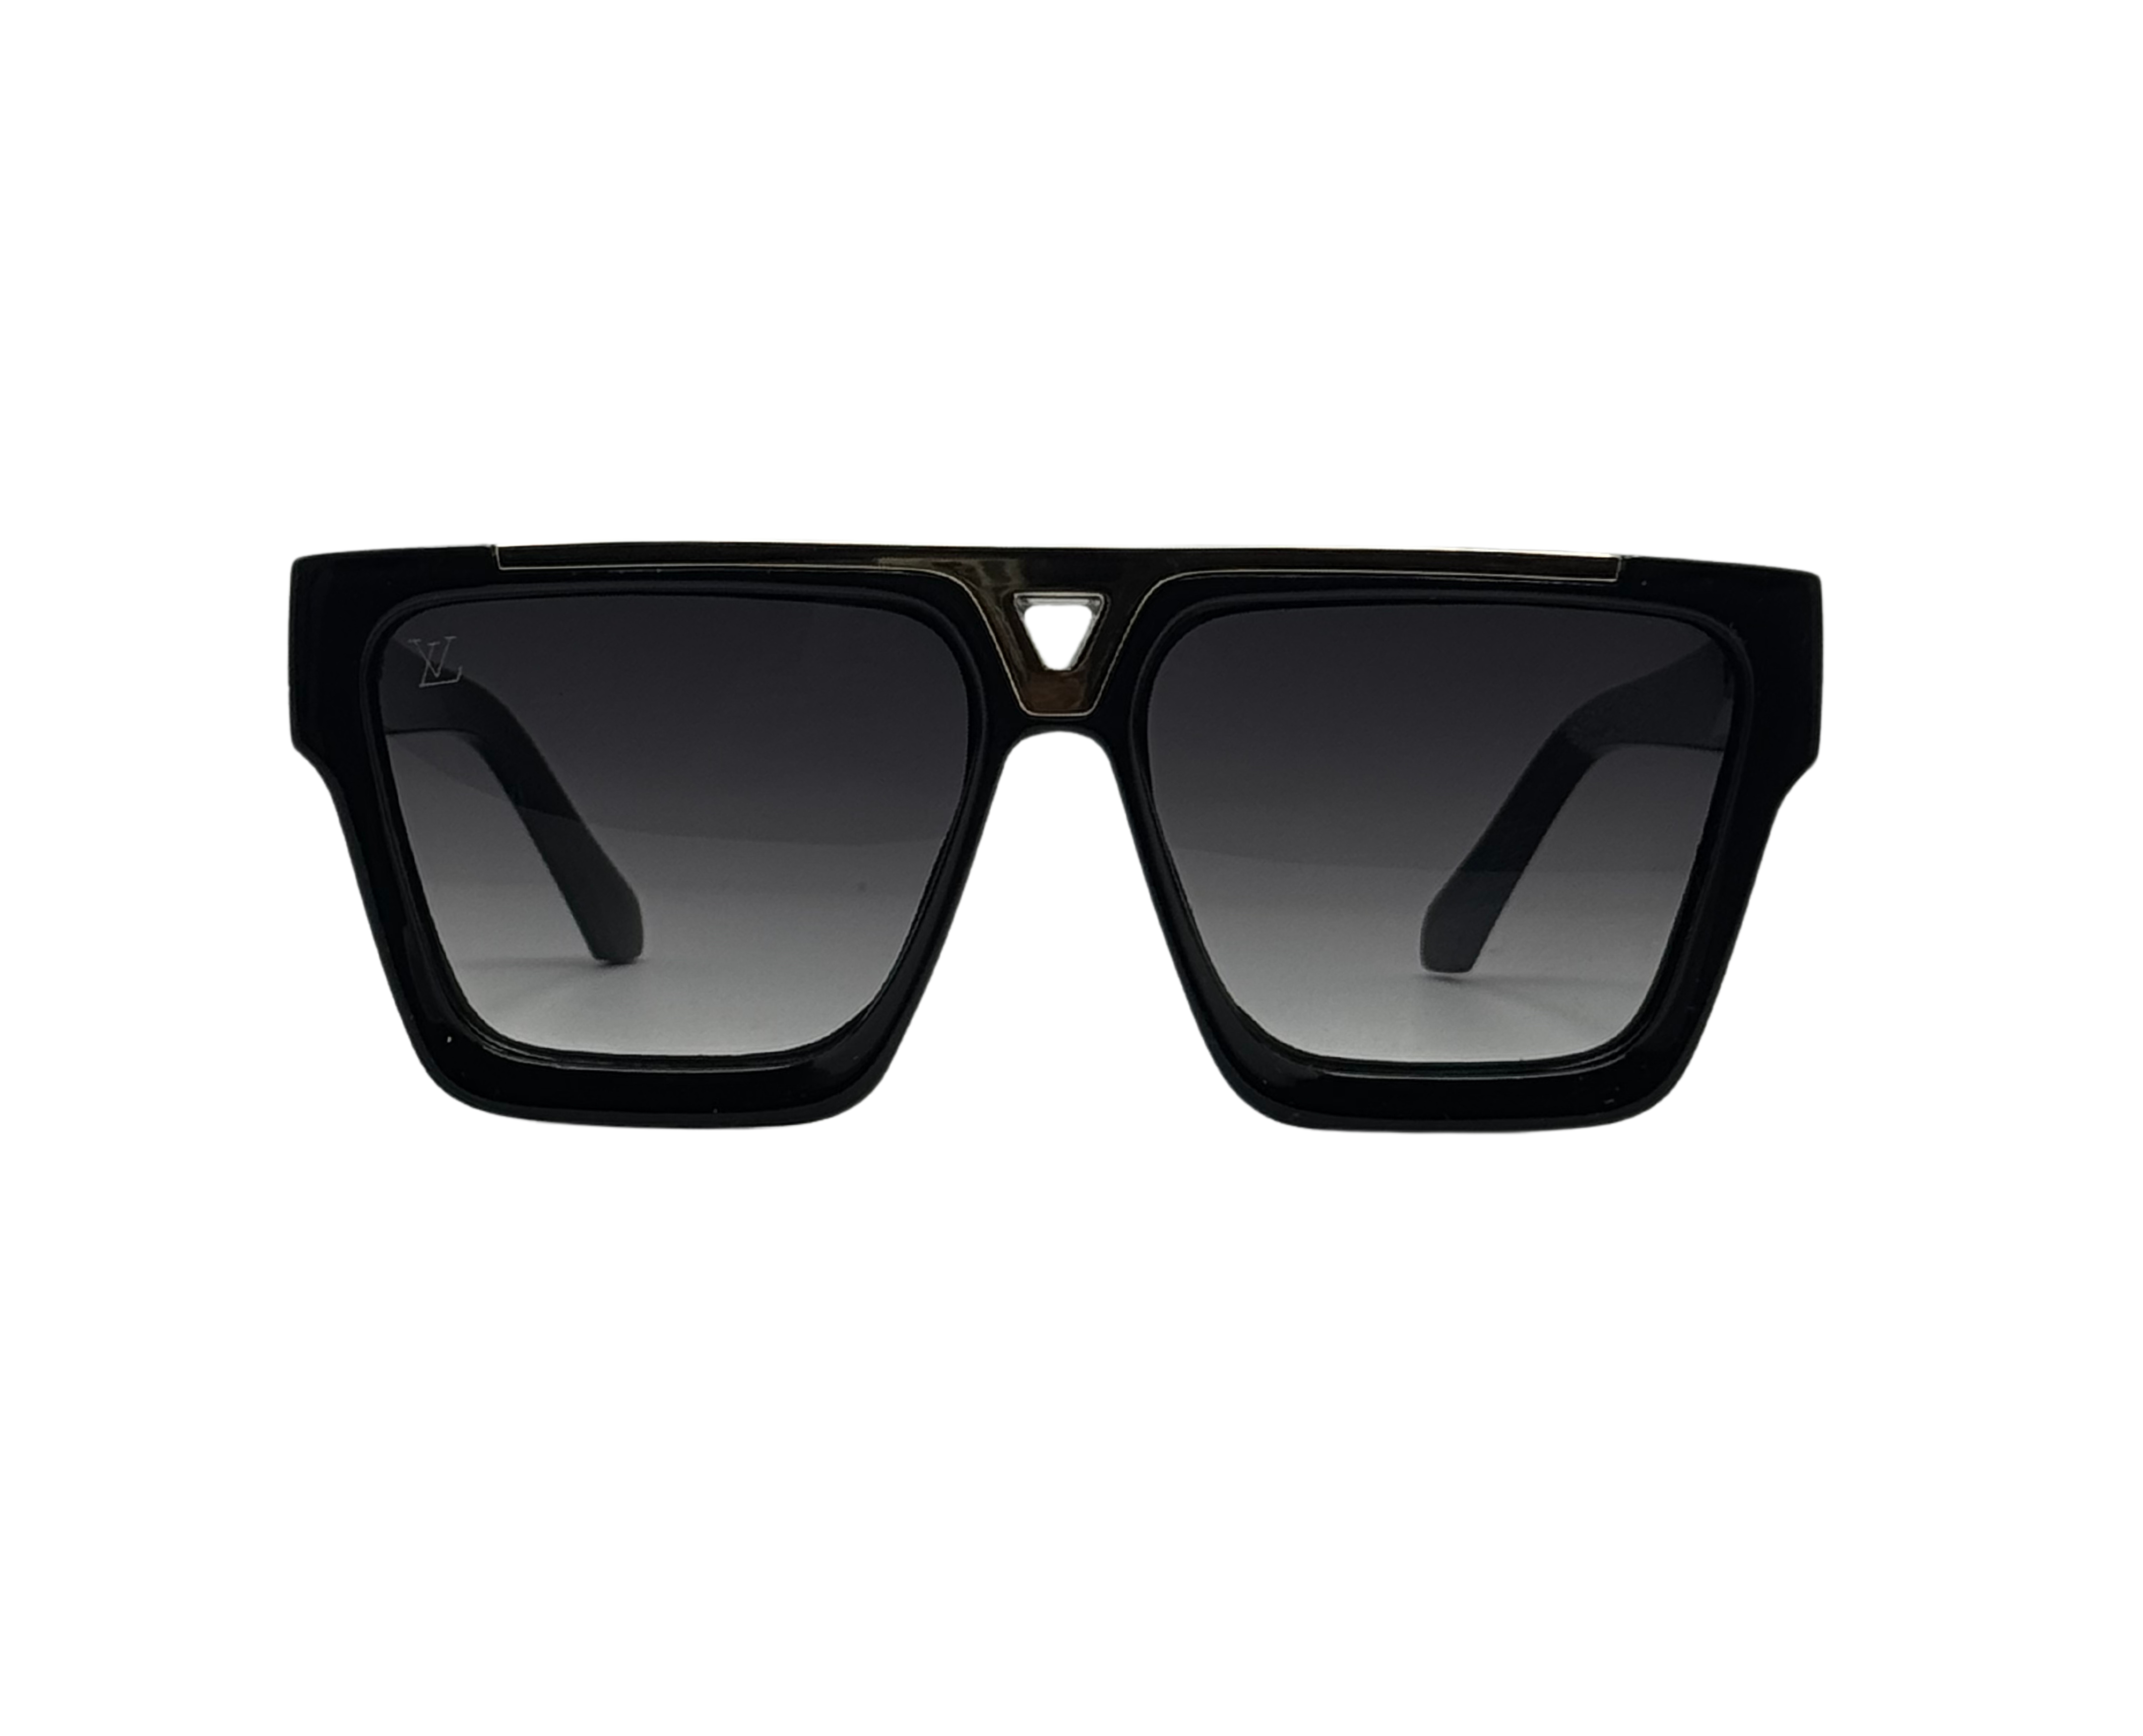 NS Luxury - LV007 - Black Gold- Sunglasses